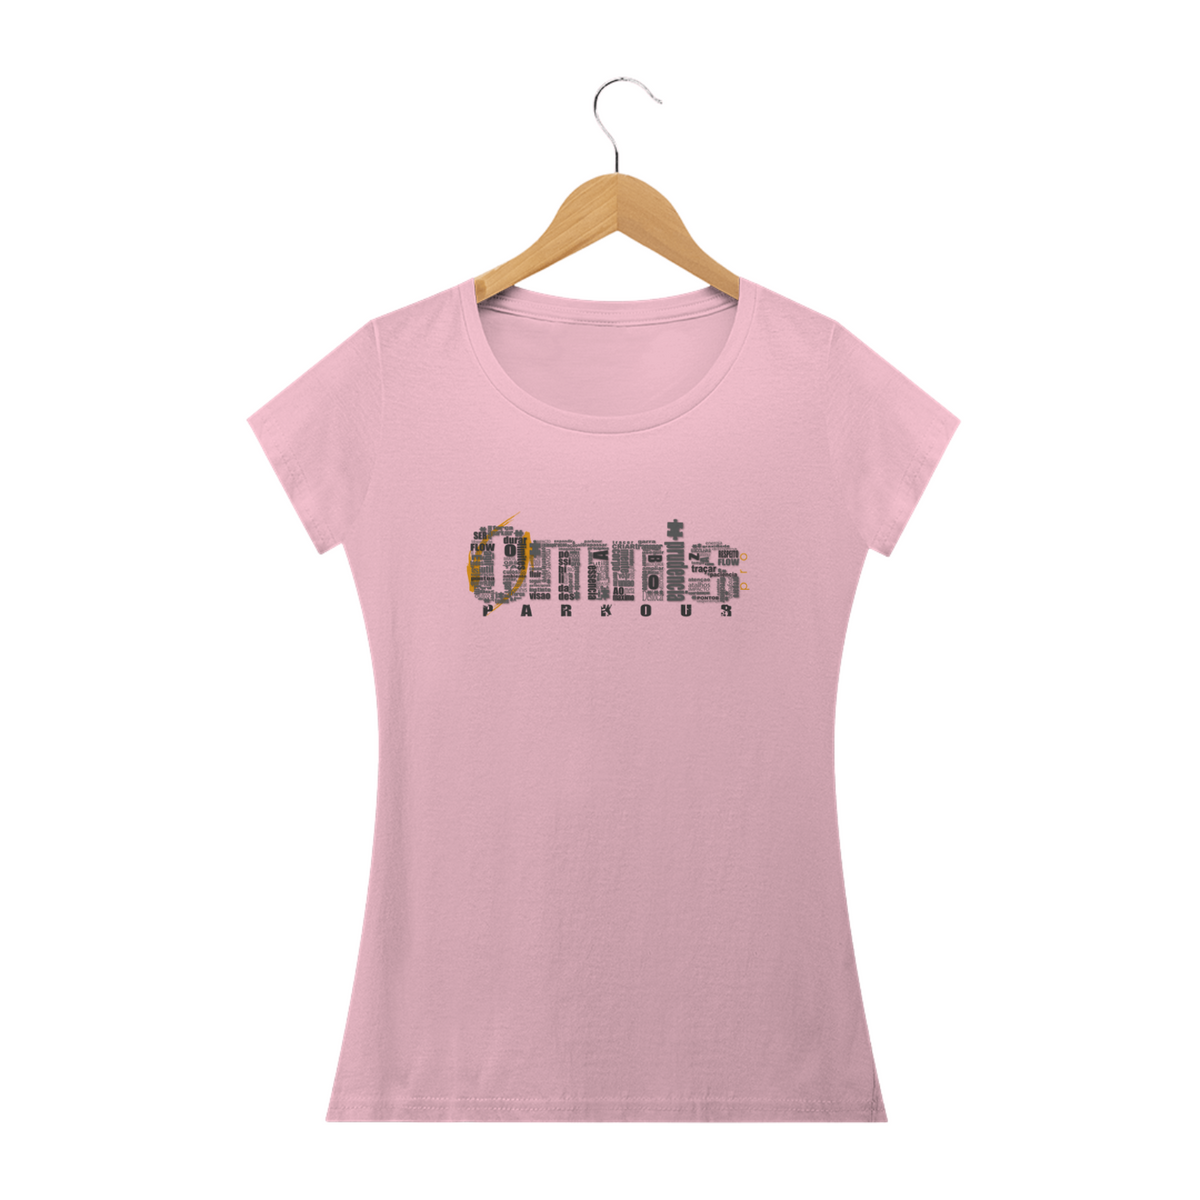 Nome do produto: Omnis pro pk feminino -M001